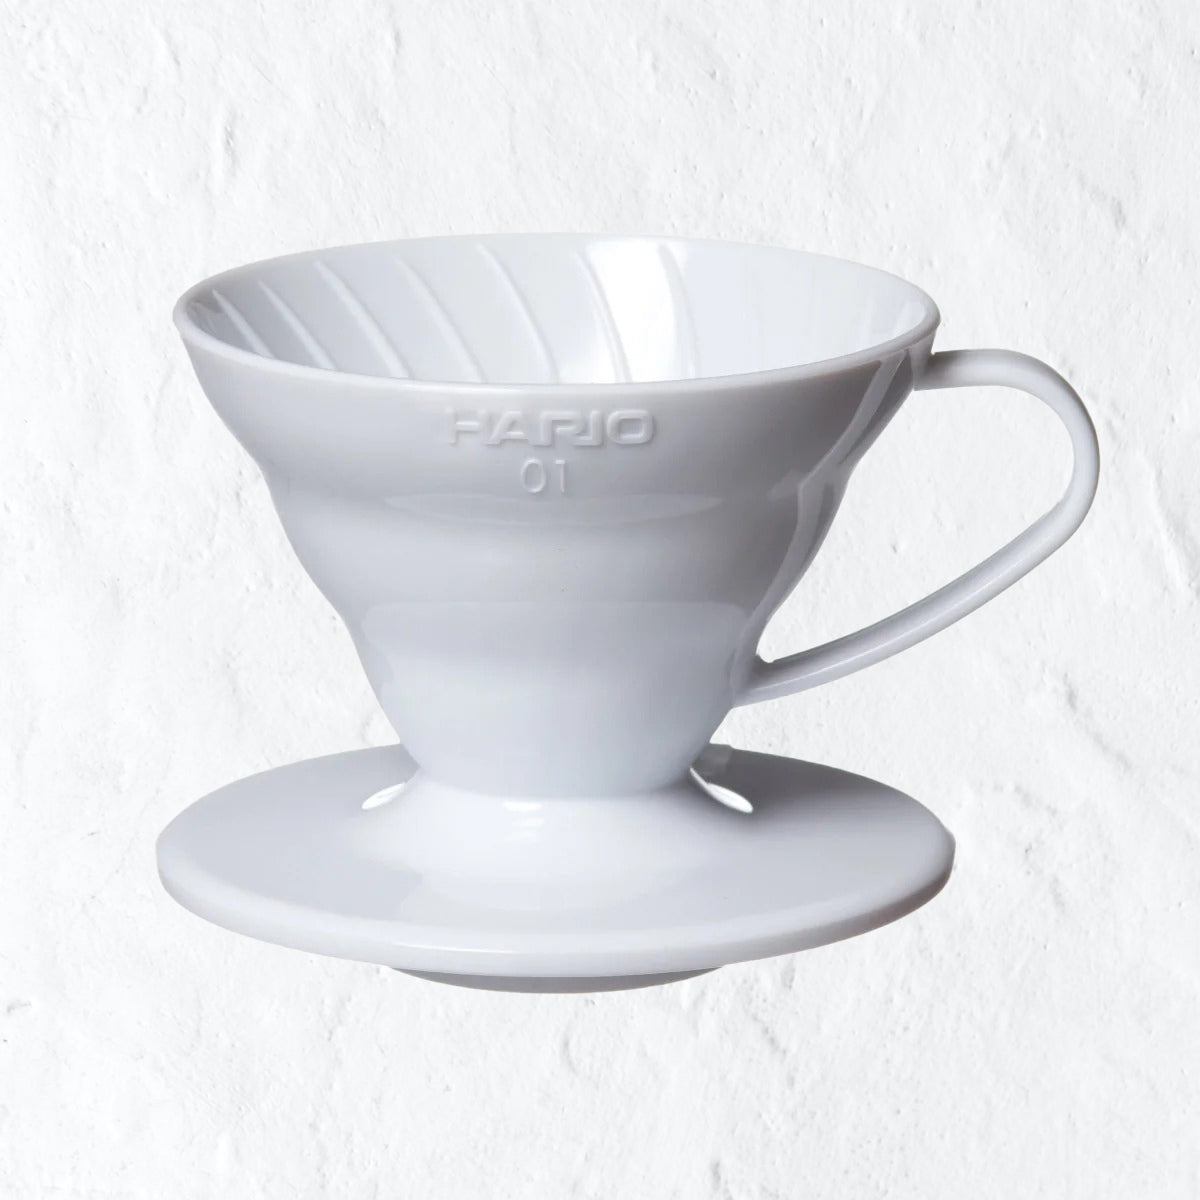 Hario V60-01 ceramic dripper white